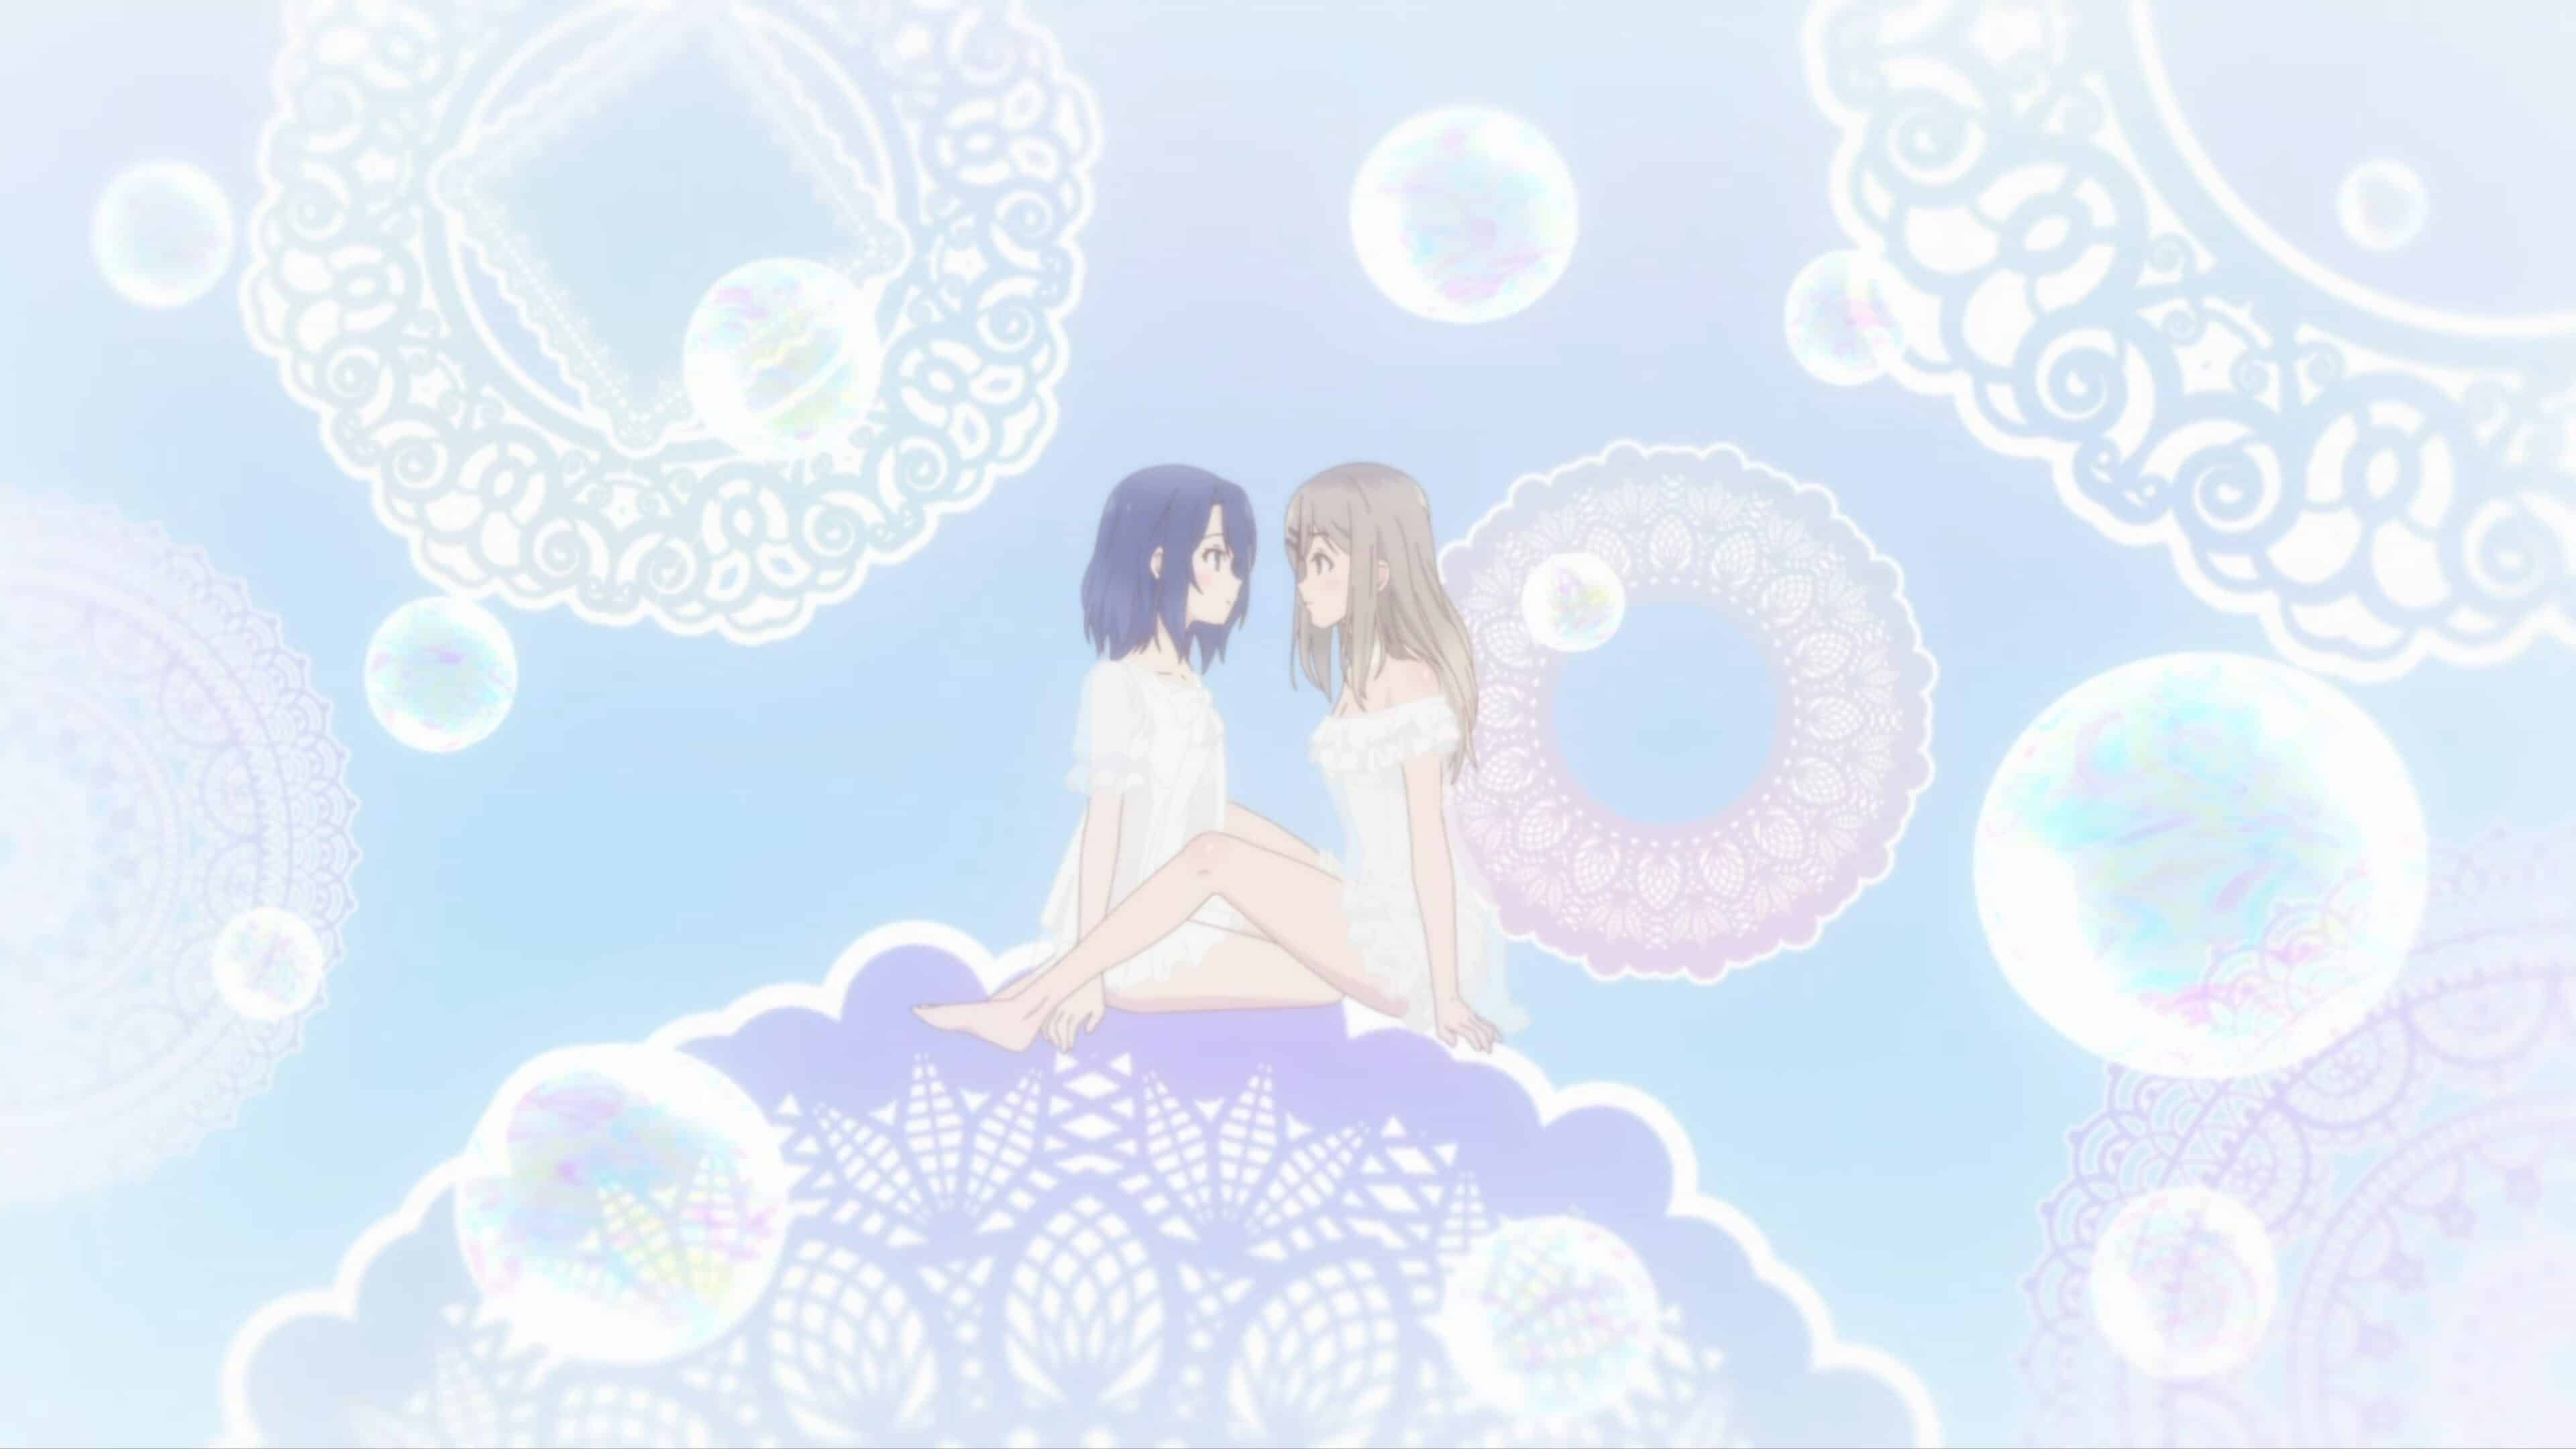 Adachi and Shimamura in a dream sequence